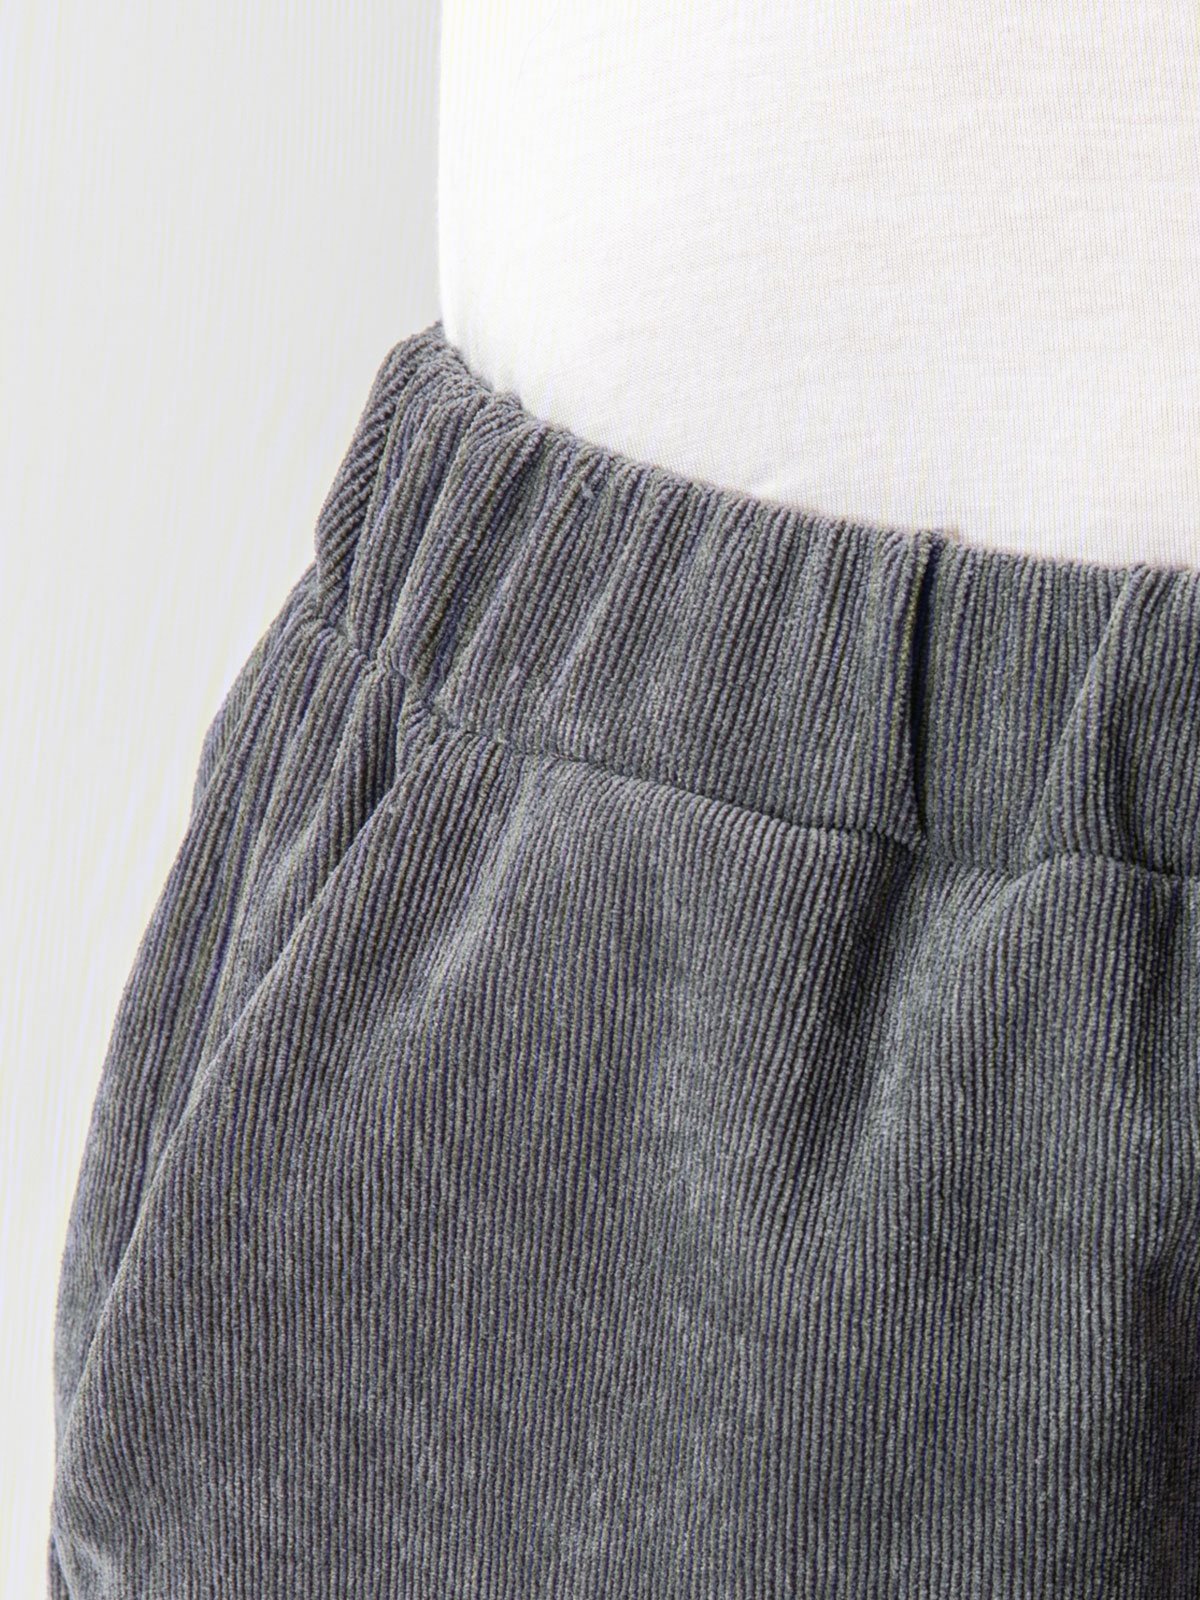 Women's Pants Trousers Tulip Hem Elastic Waist Pockets Baggy Full Length Workout Corduroy Pants Baggy Fashion